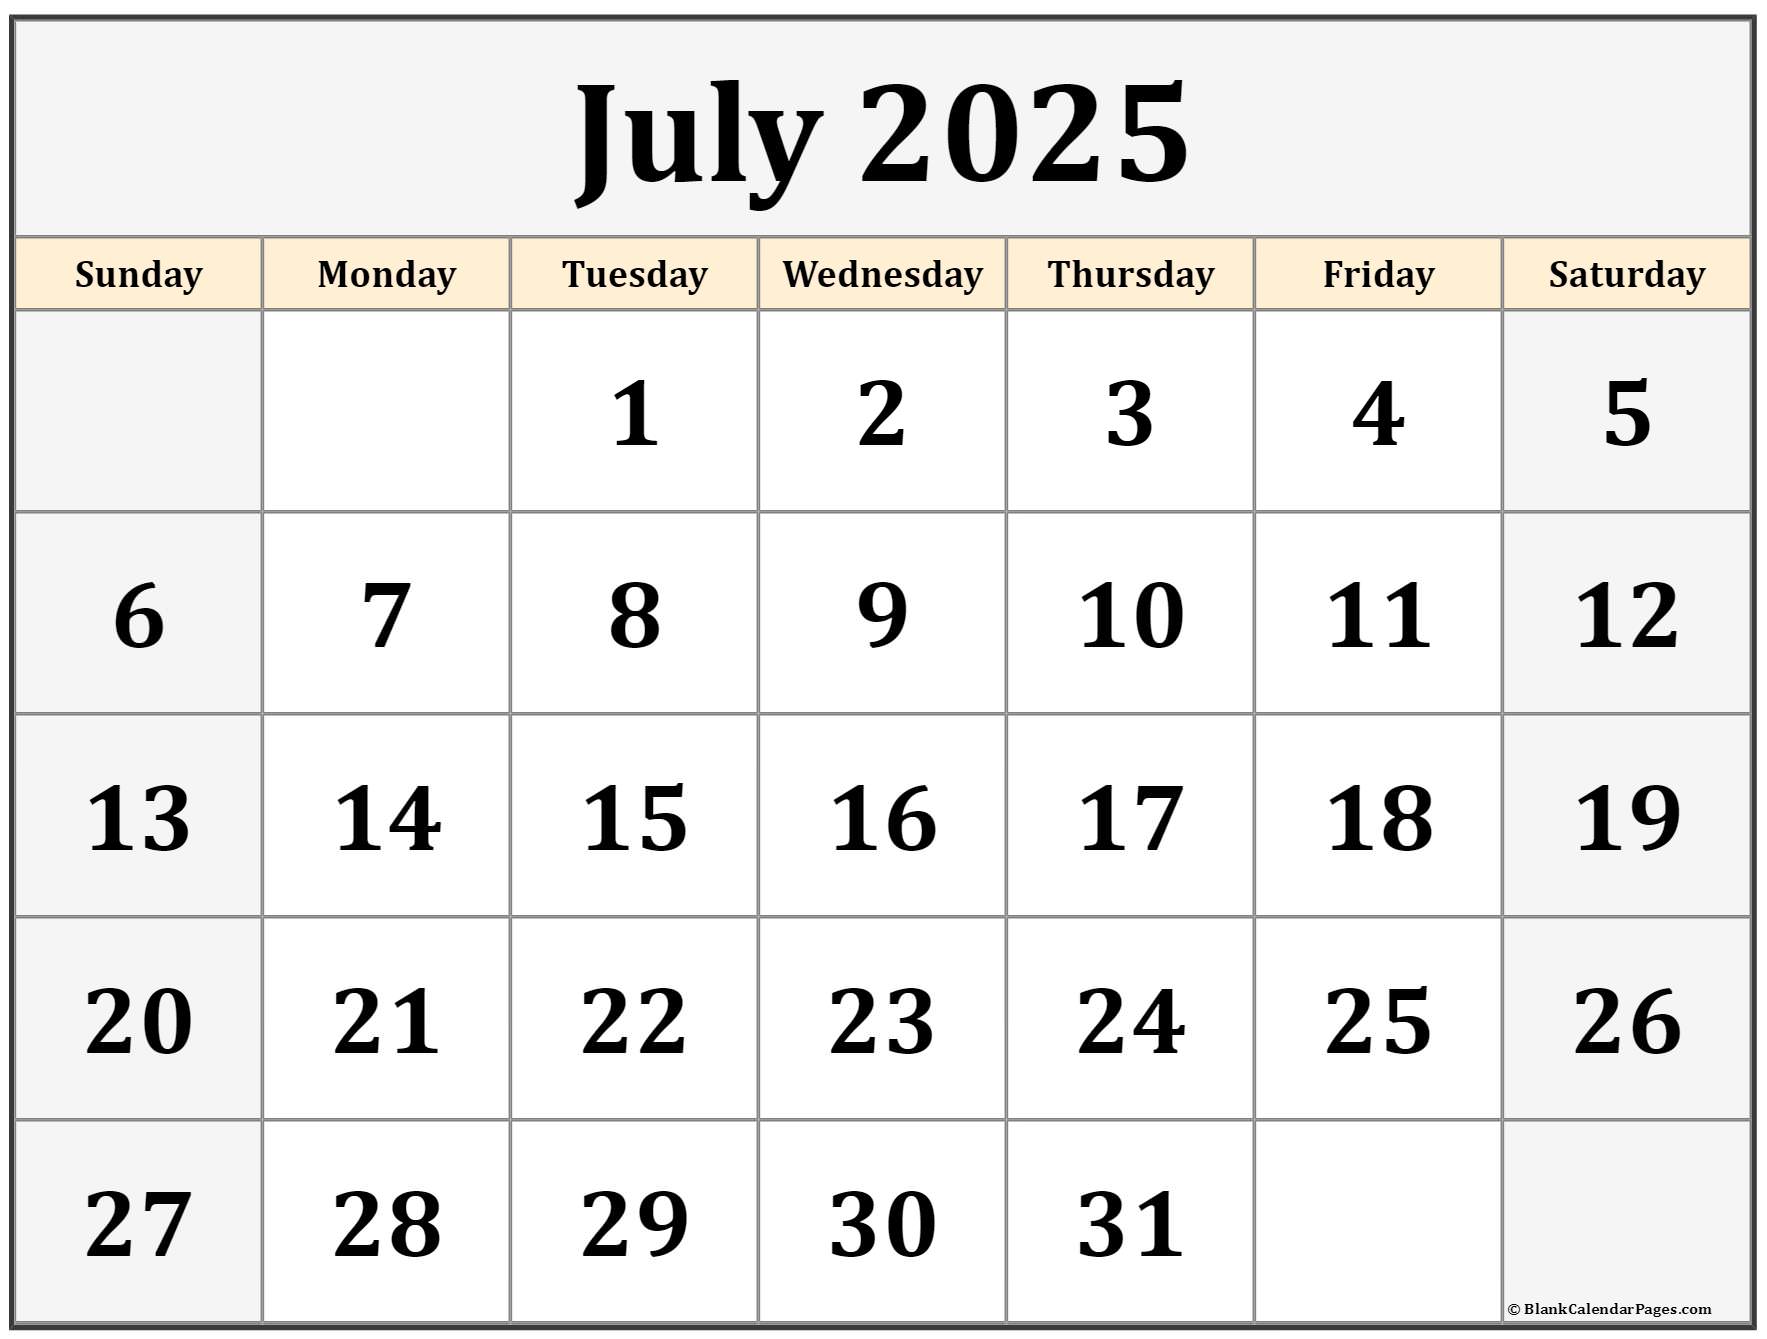 July 2025 calendar  free printable calendar